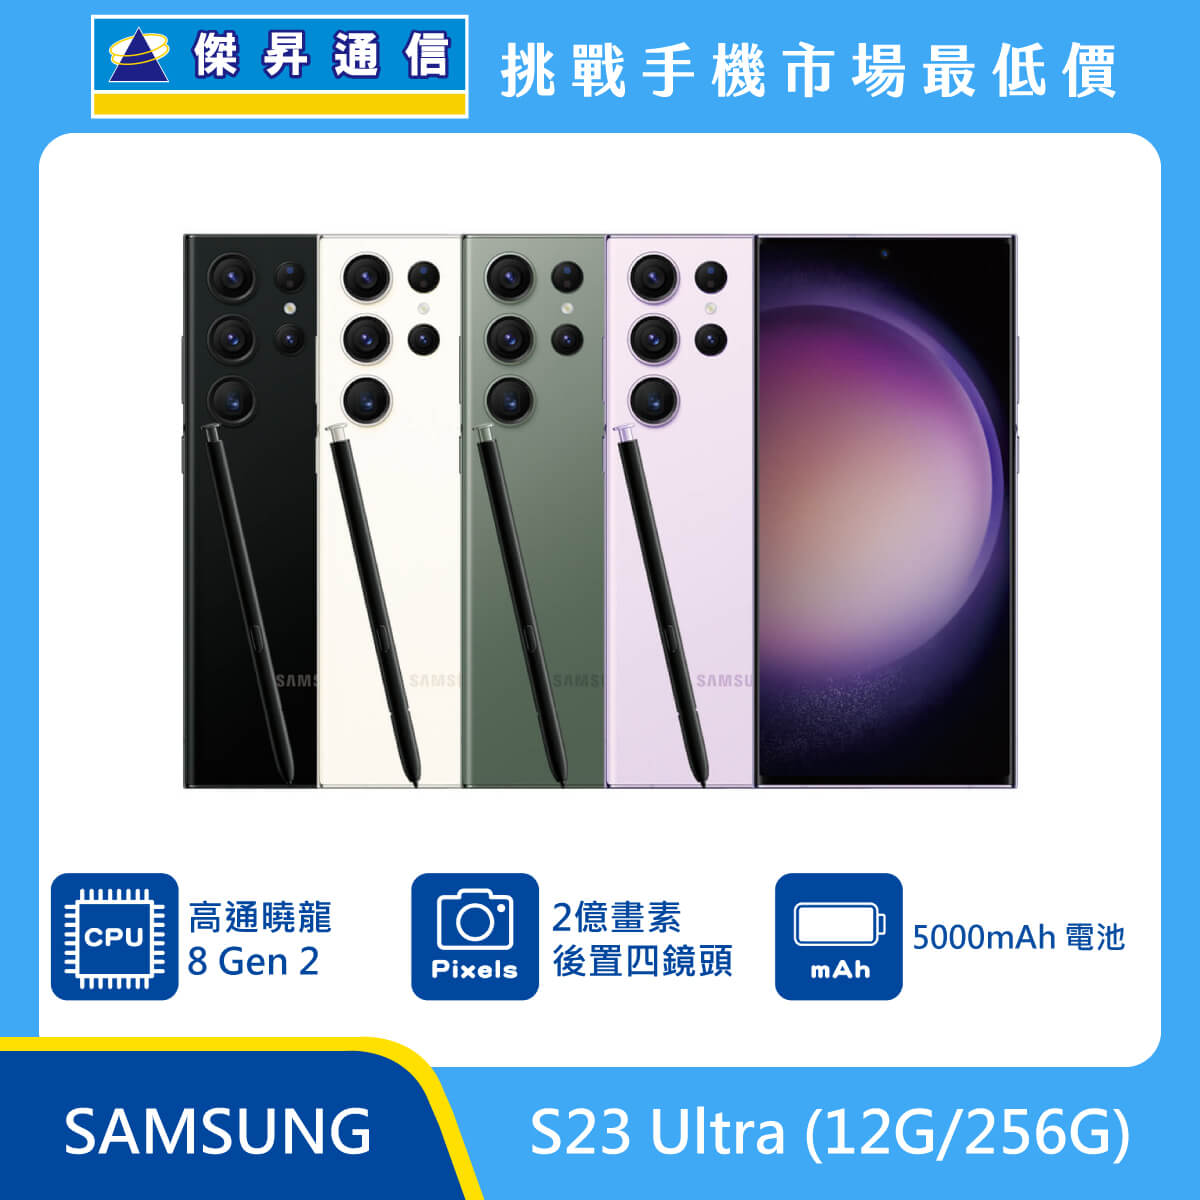 SAMSUNG S23 Ultra (12G/256G)